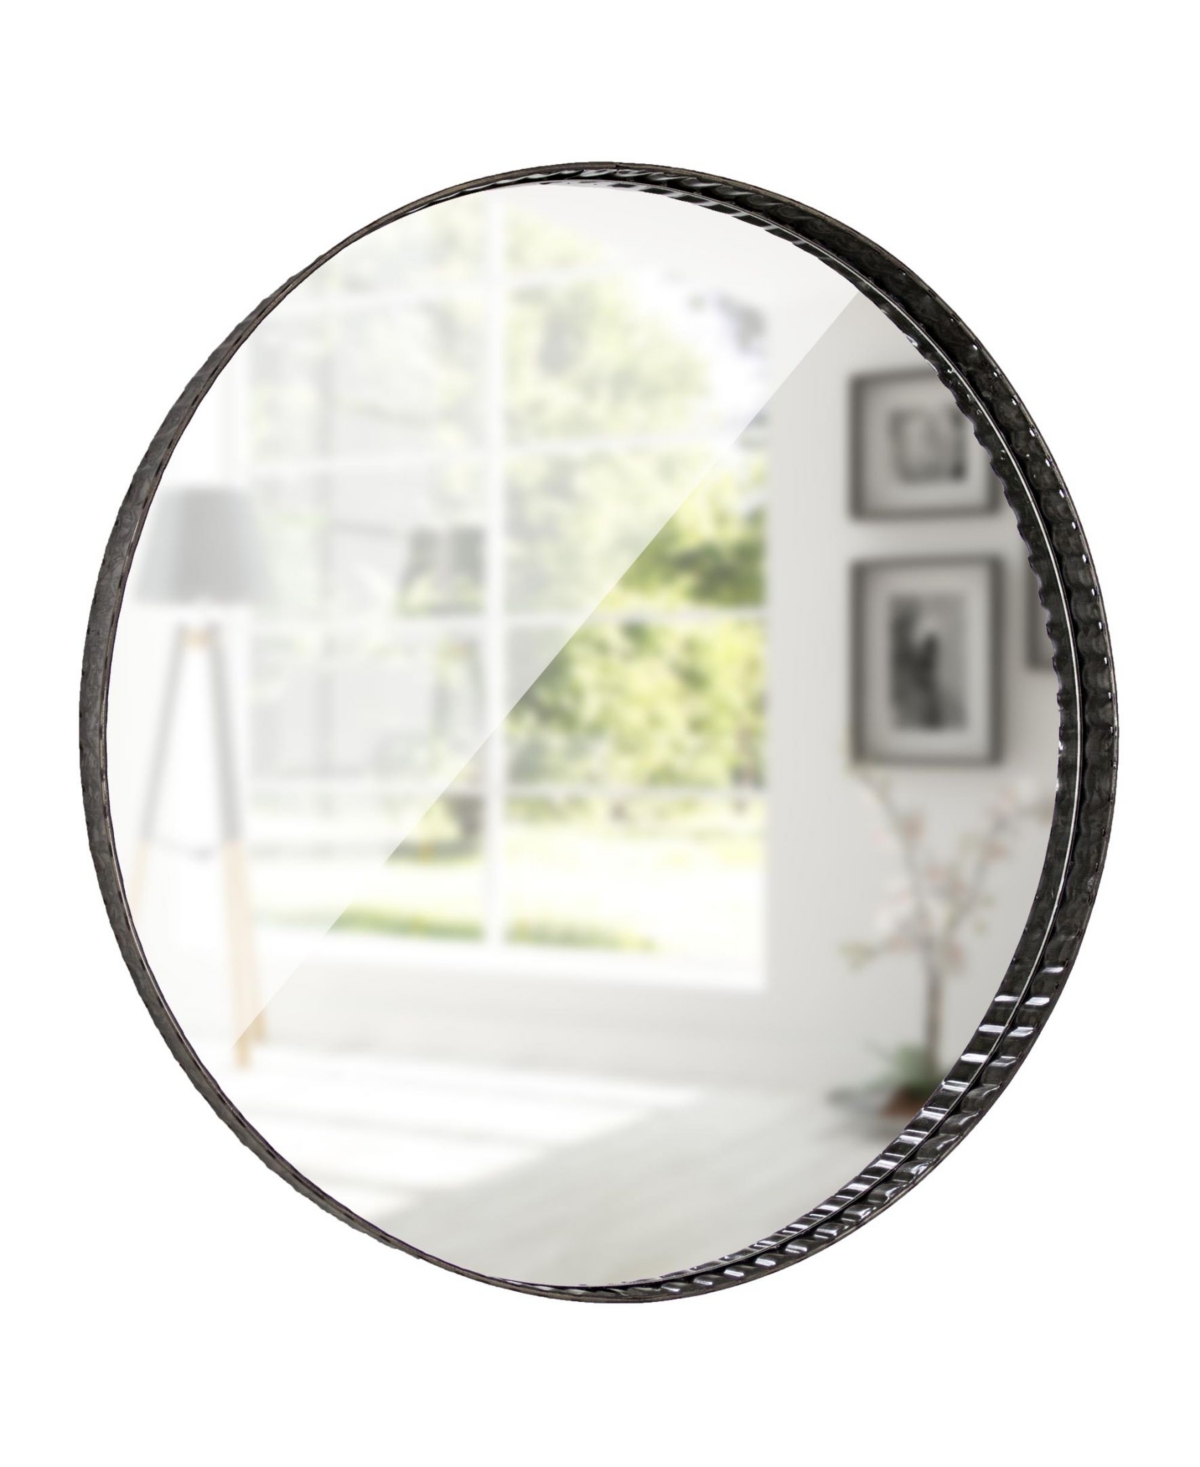 American Art Decor Galvanized Round Wall Vanity Mirror - Gray